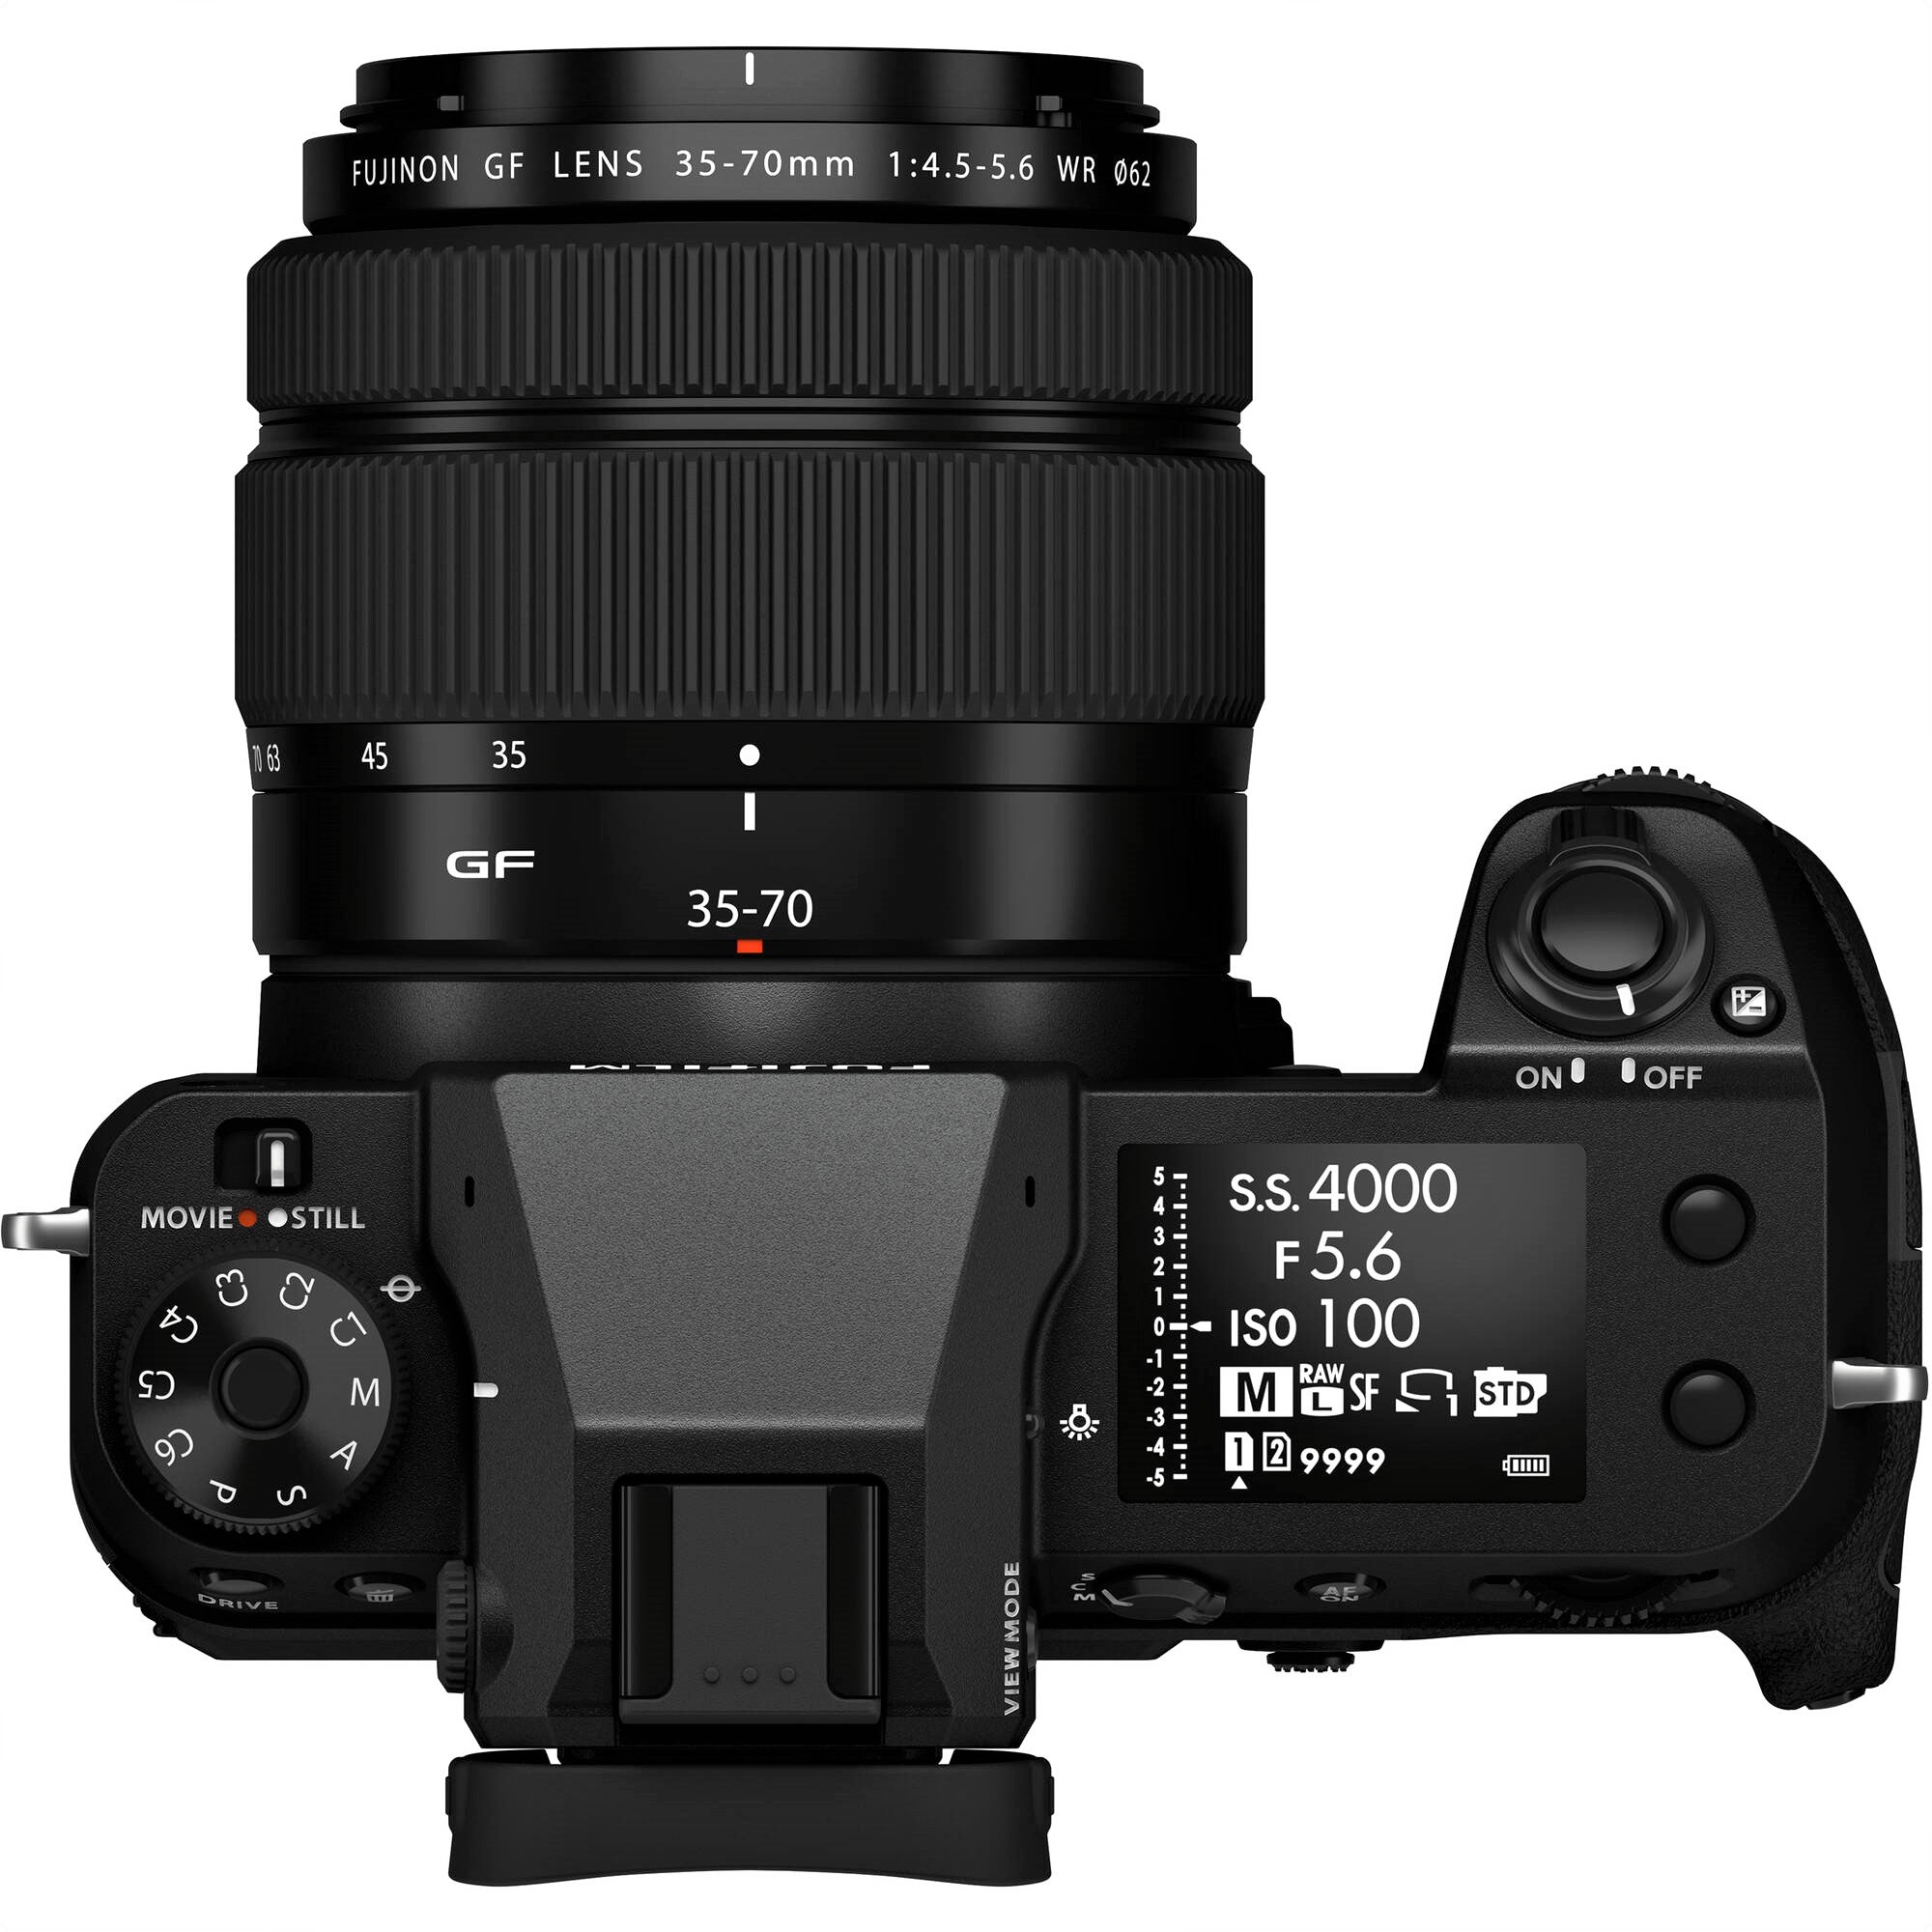 Fujifilm GFX 50S II Body with GF35-70mm F4.5-5.6 WR Lens Kit - Top View